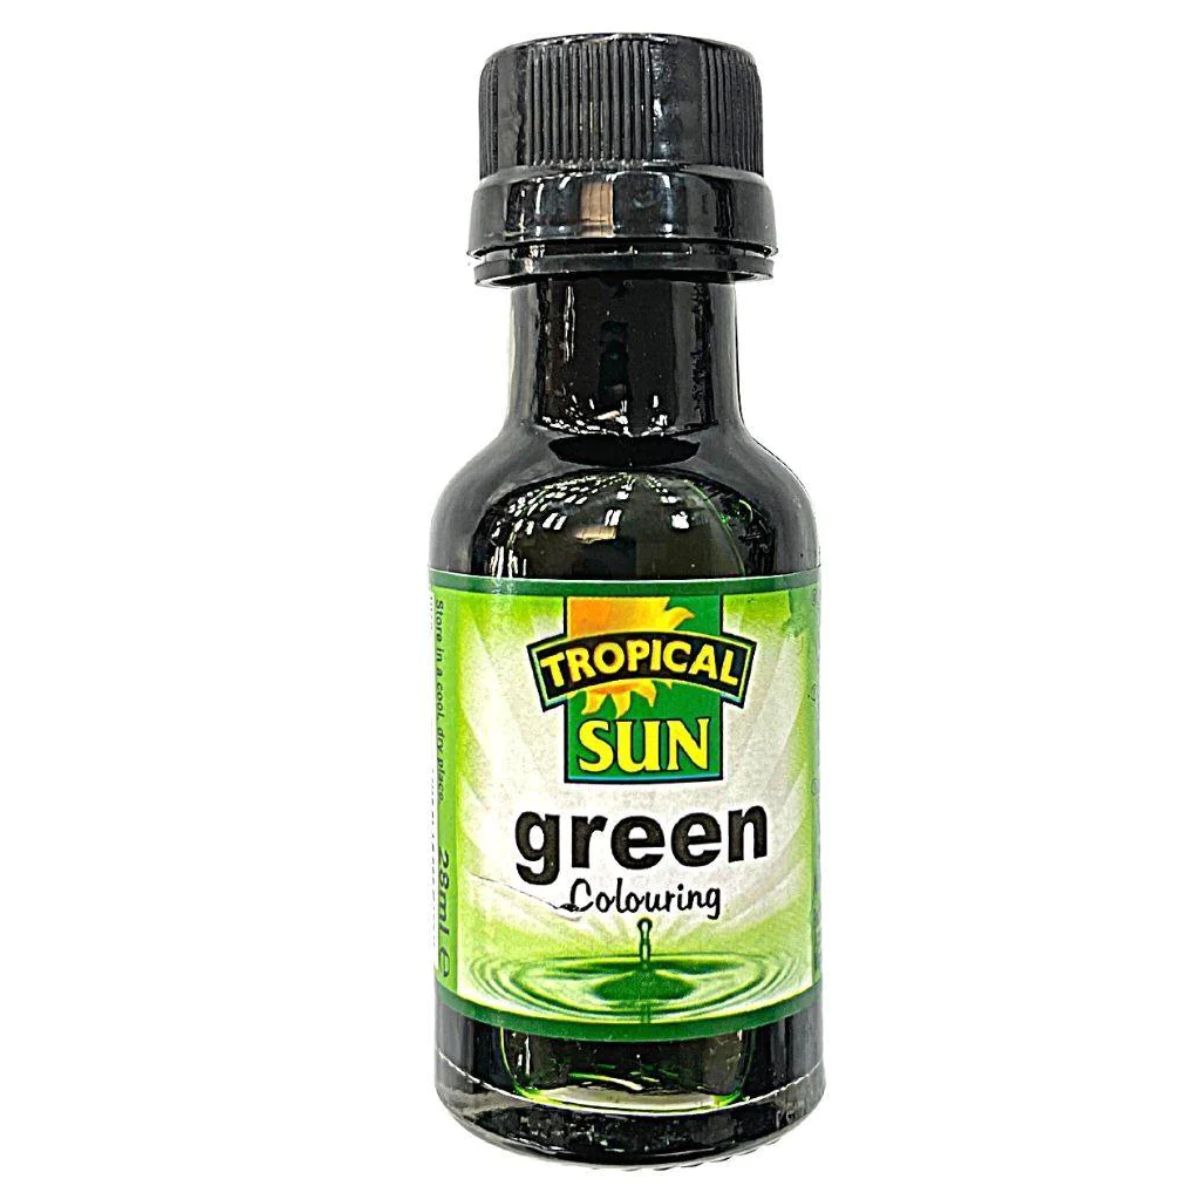 A bottle of Tropical Sun - Green Colouring - 28ml.